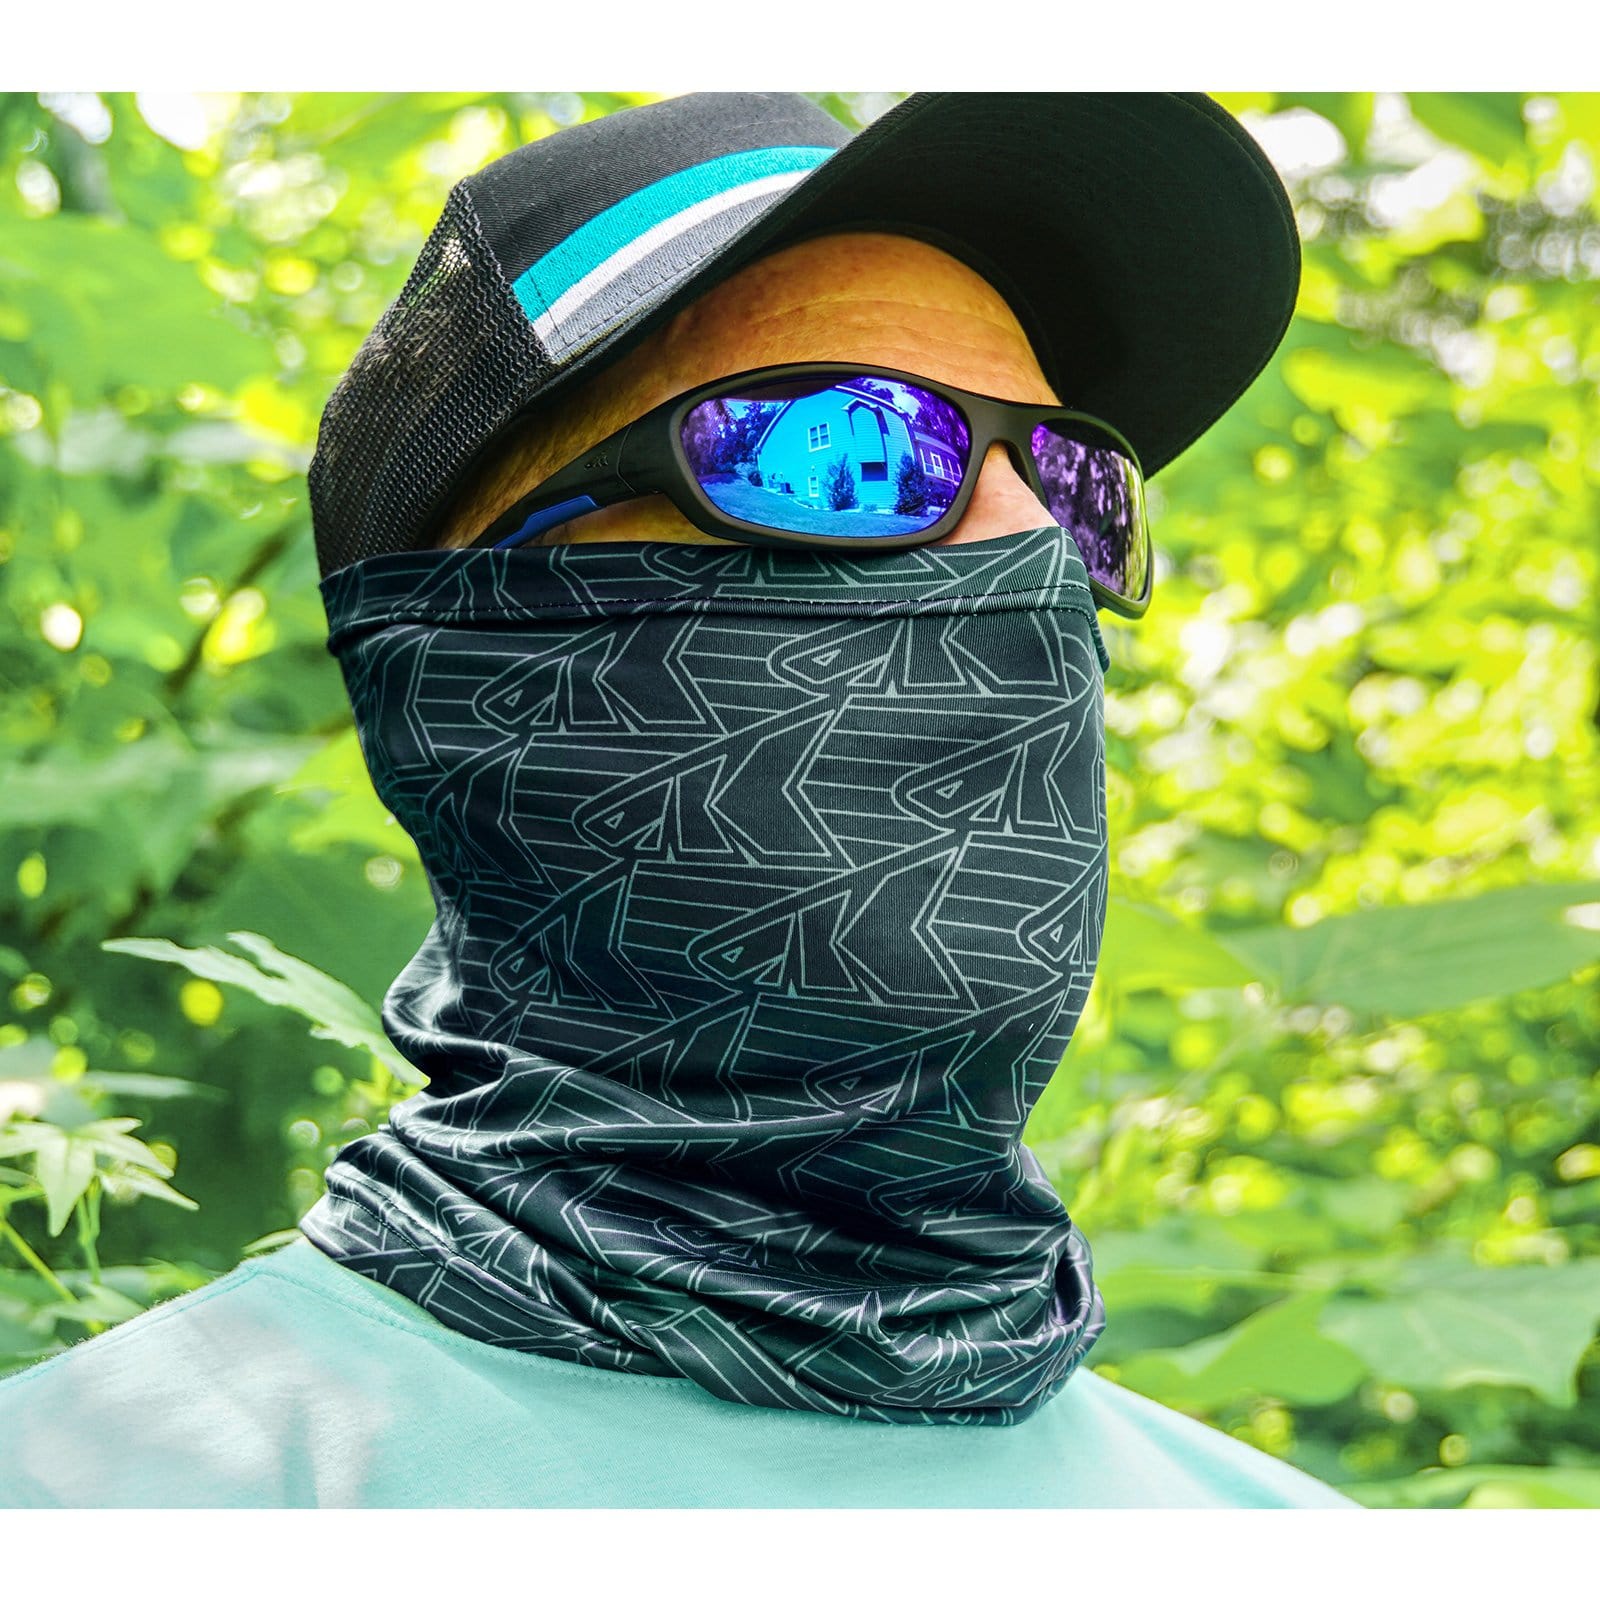 BUFF UVX Mask and UVX Balaclava Provide Heads-Up Protection